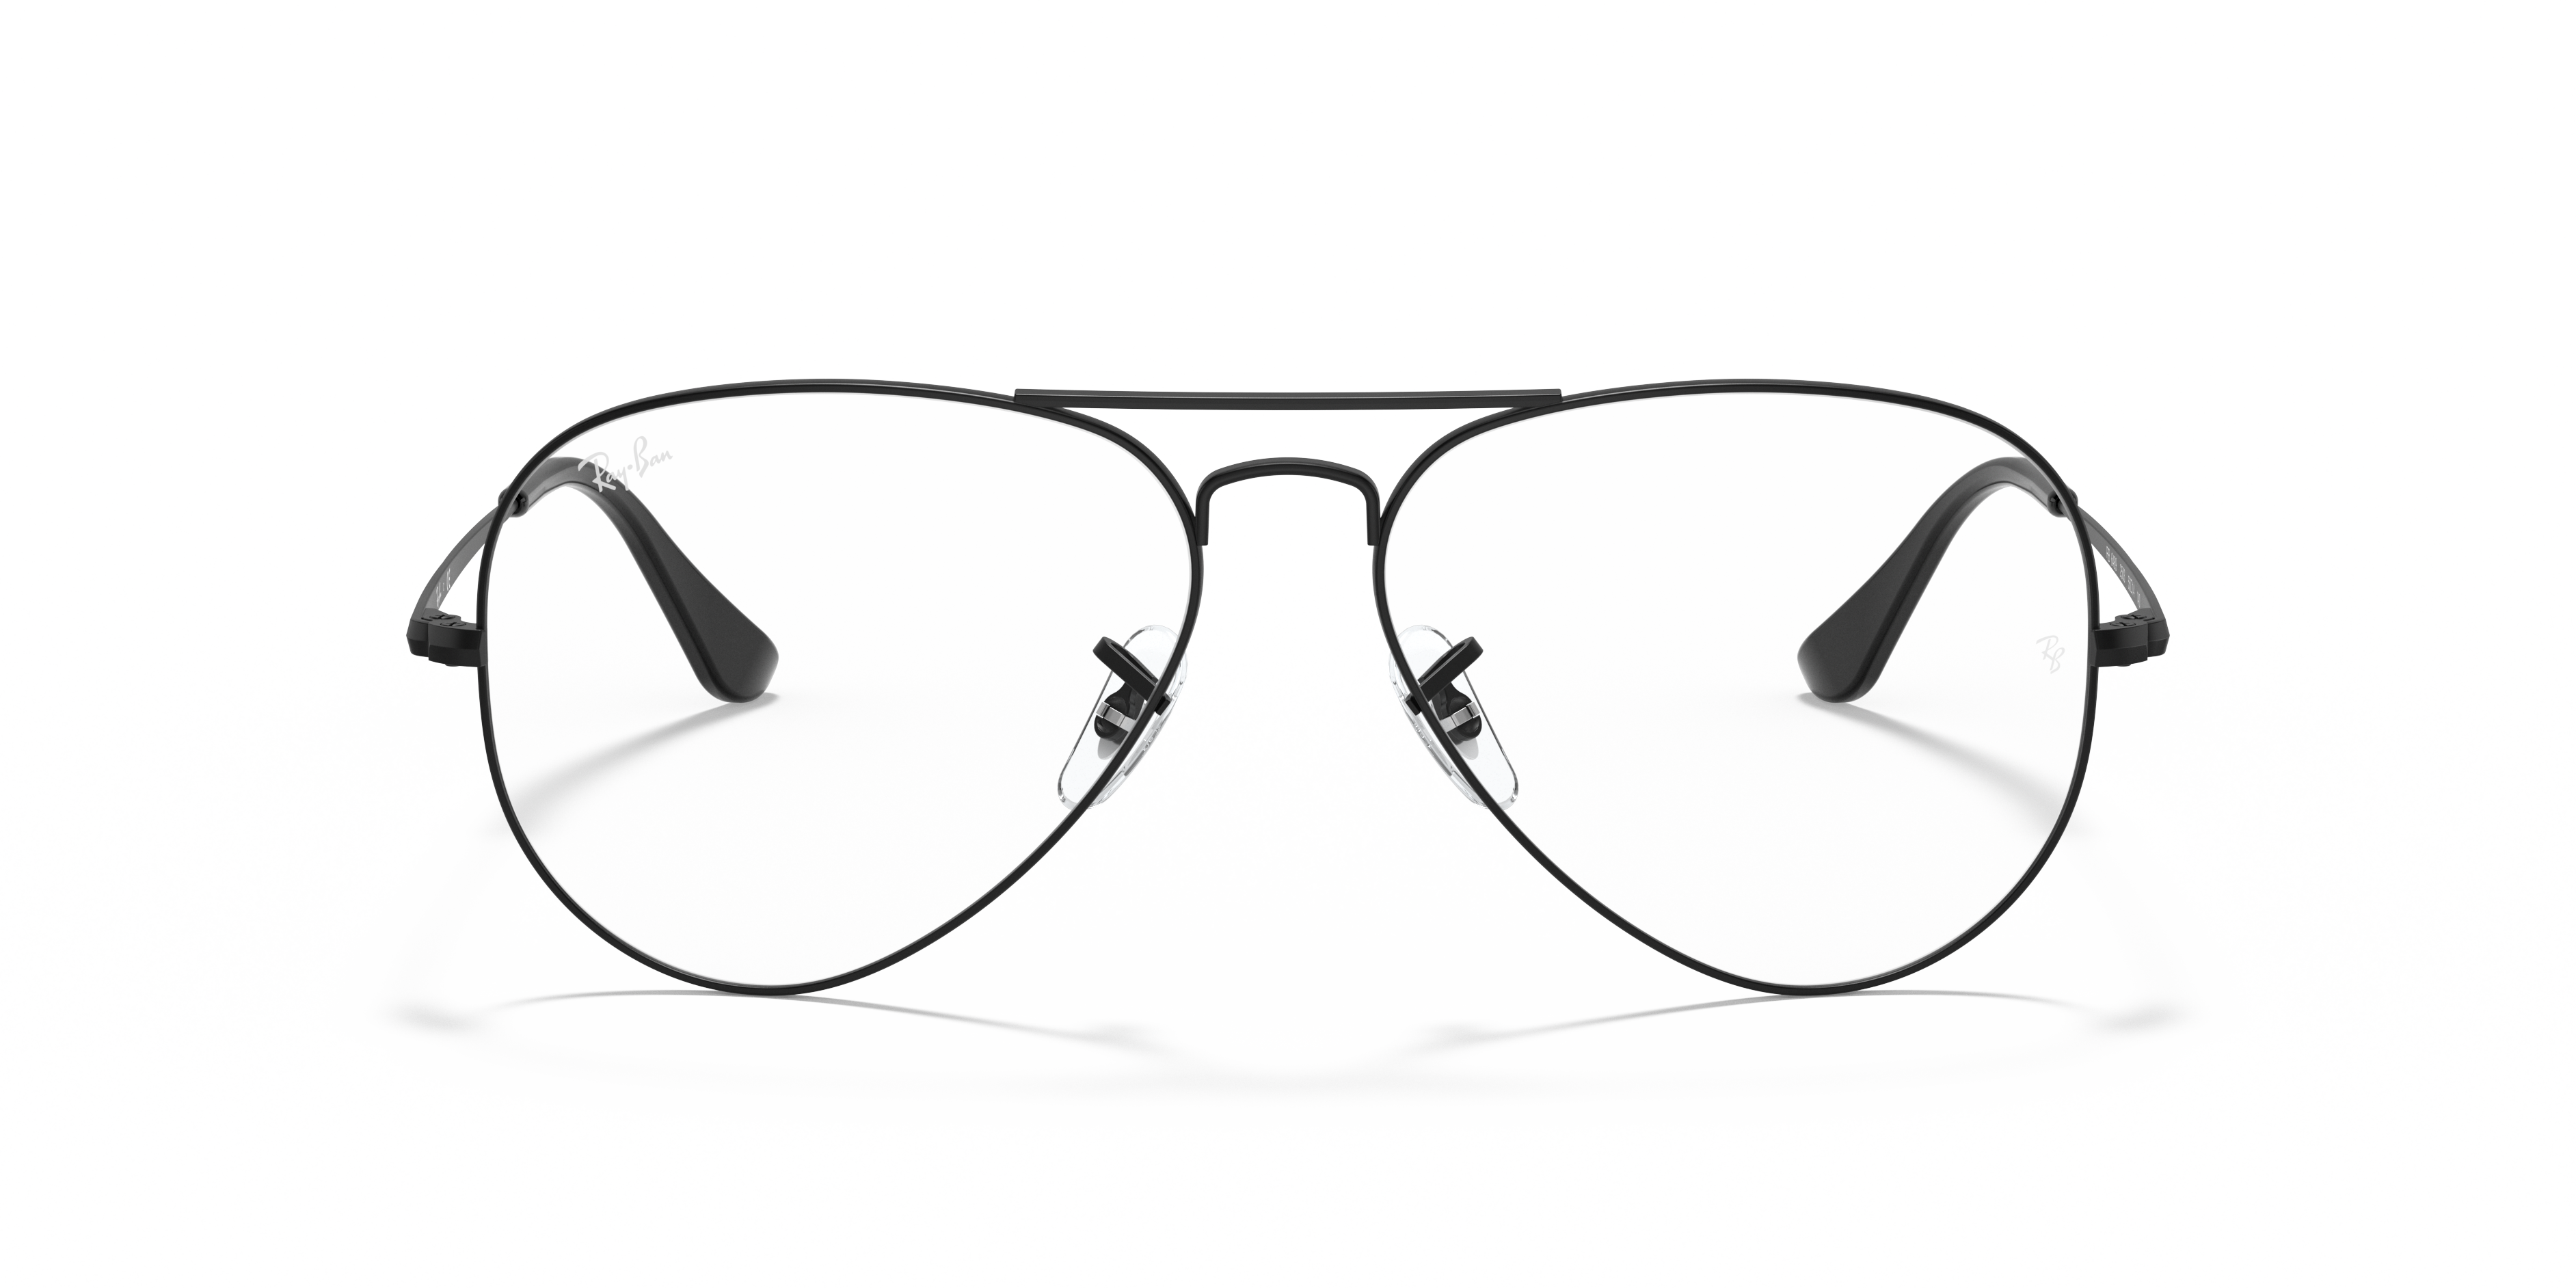 Accessories Sunglasses Aviator Glasses Spektre Aviator Glasses primrose-black party style 